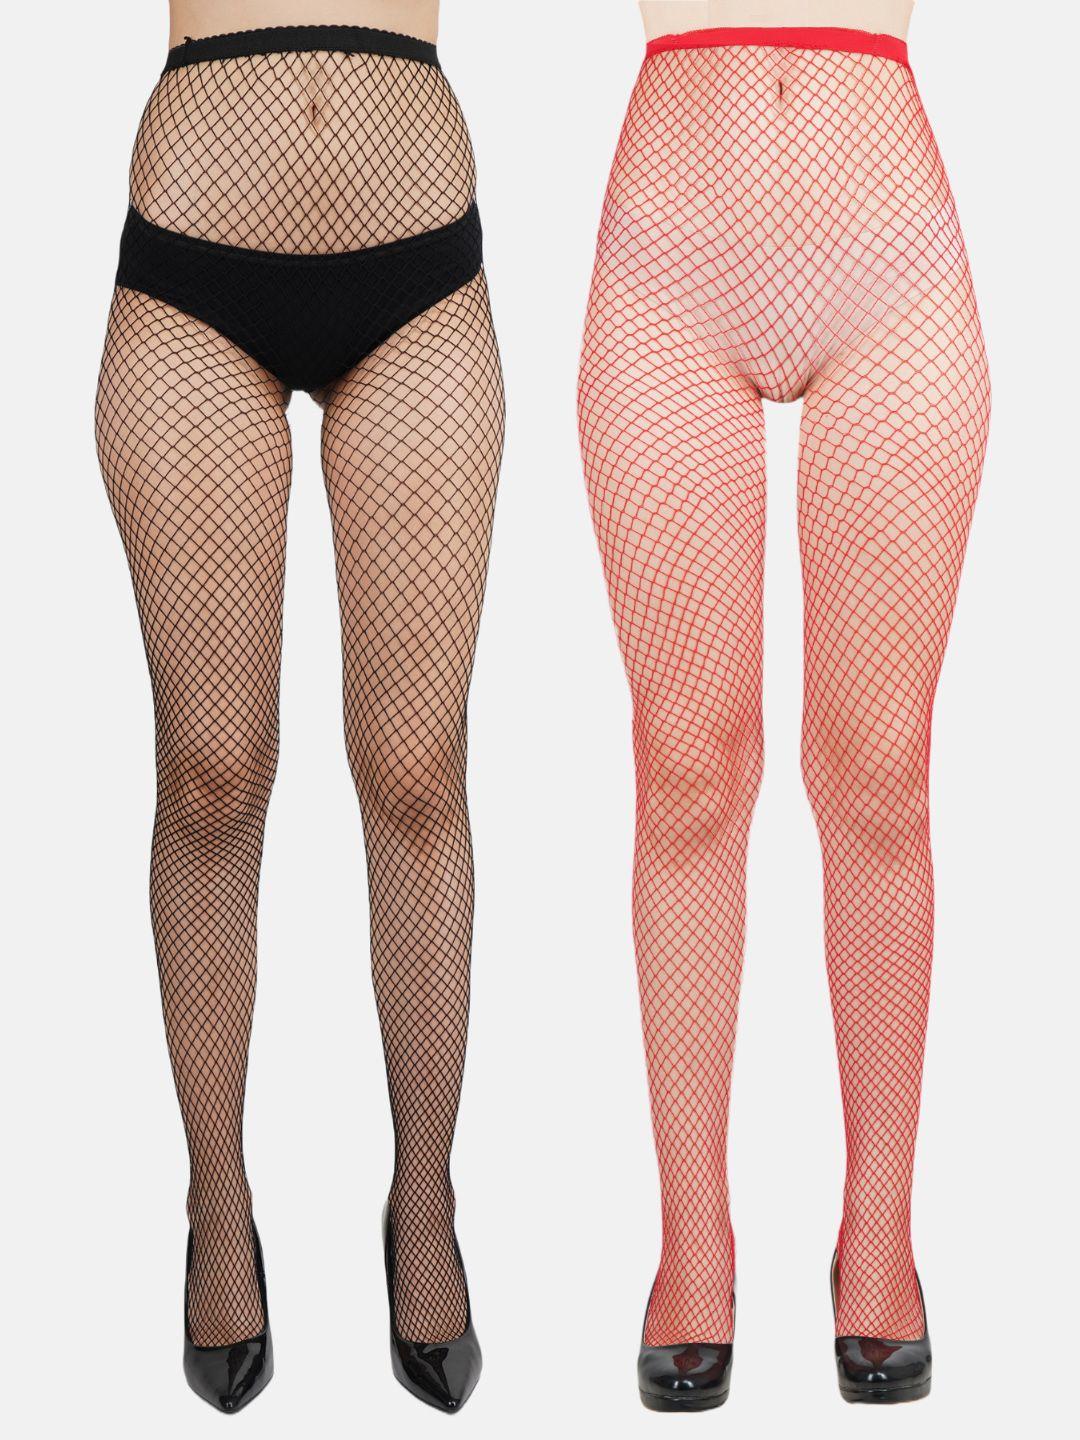 n2s next2skin women pack of 2 patterned fishnet pantyhose stockings